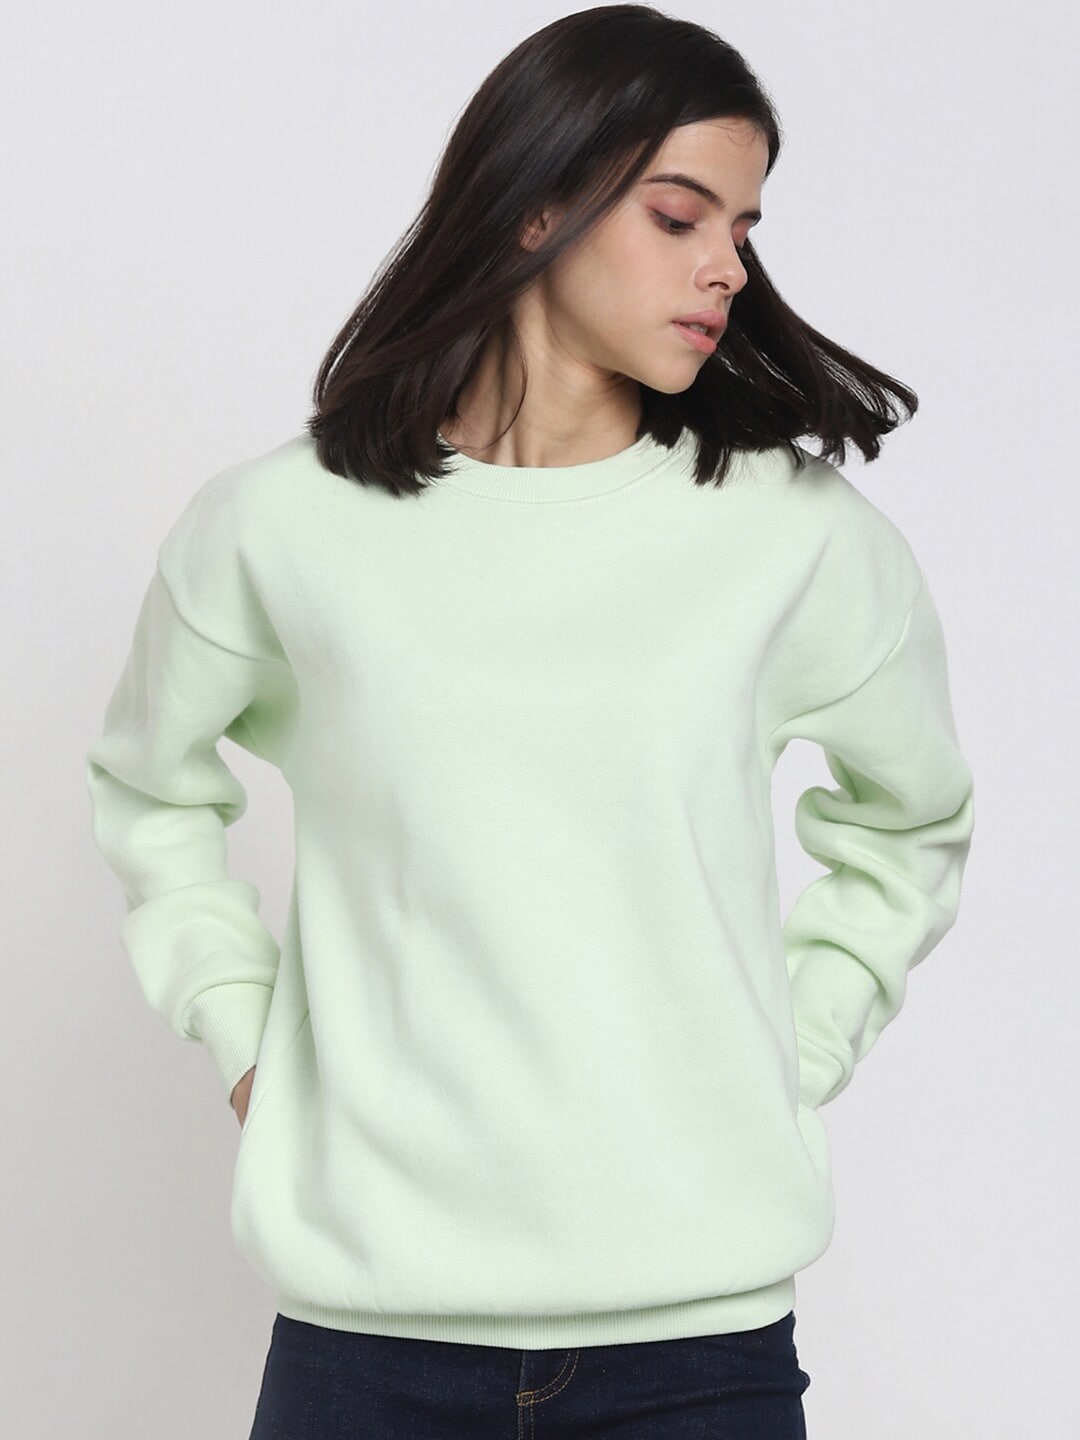 Bewakoof Women Green Sweatshirt Price in India